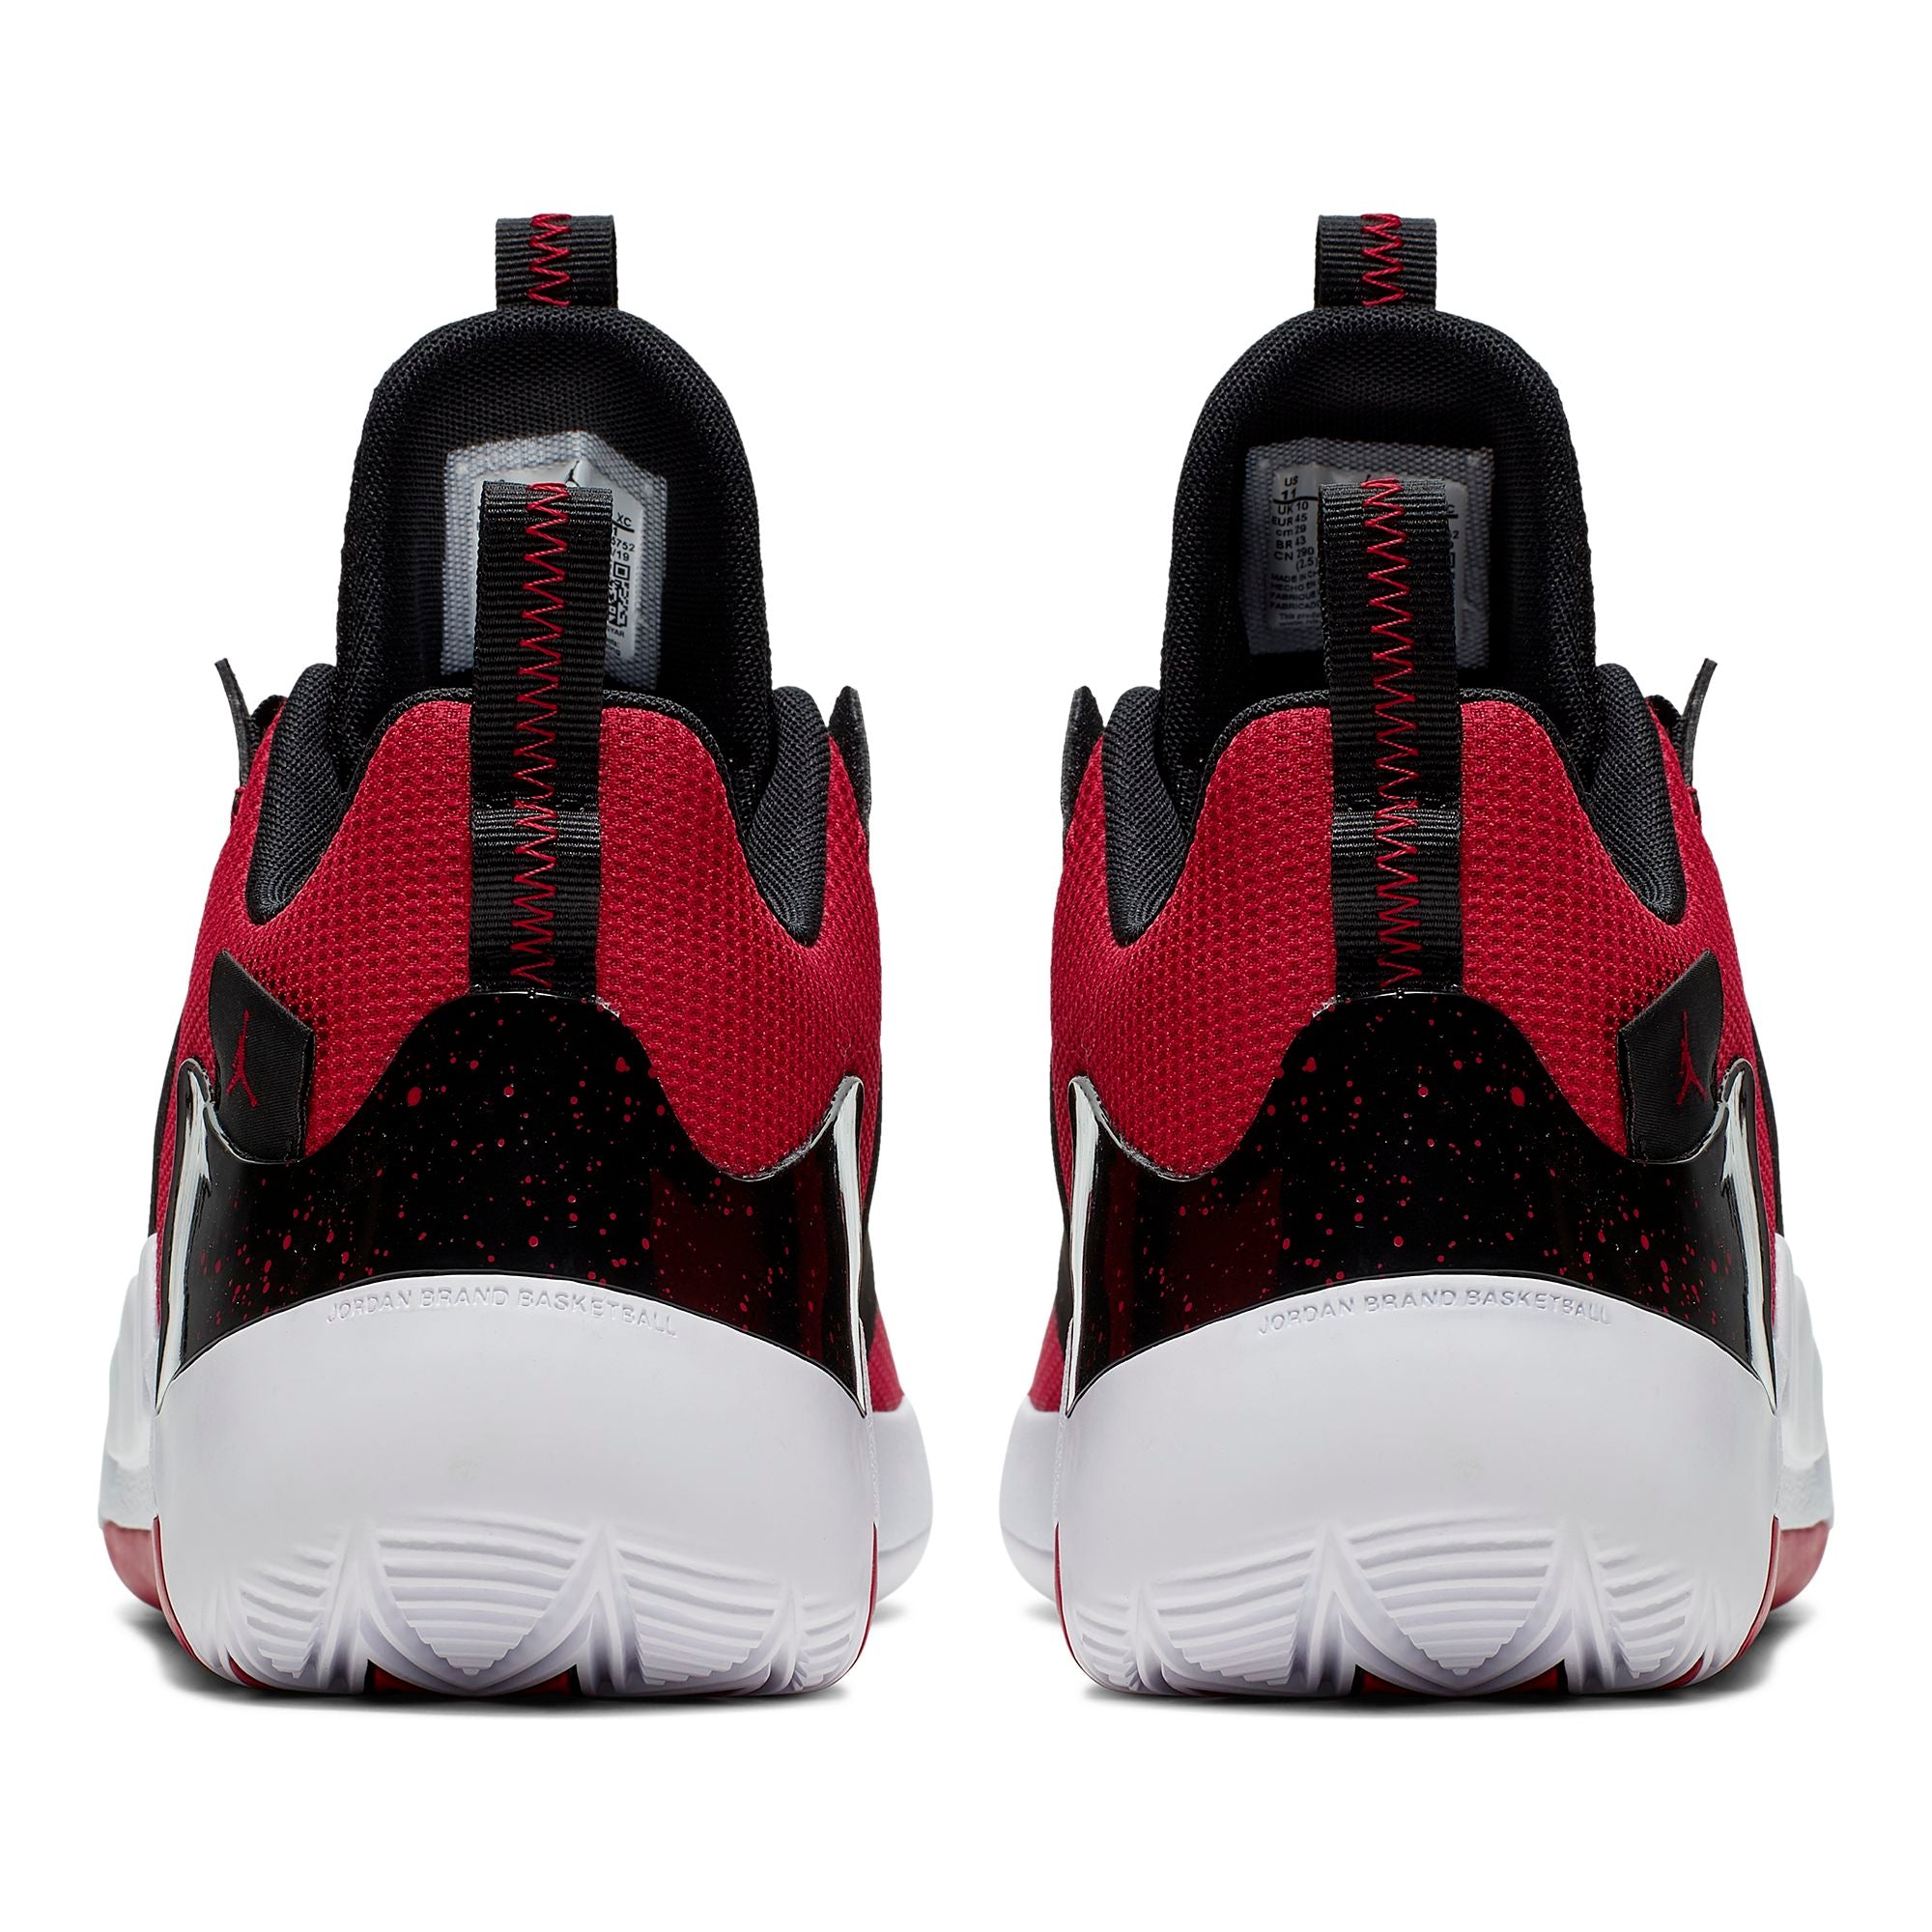 Nike Jordan Zoom Zero Gravity Basketball Boot/Shoe - Gym Red/Black